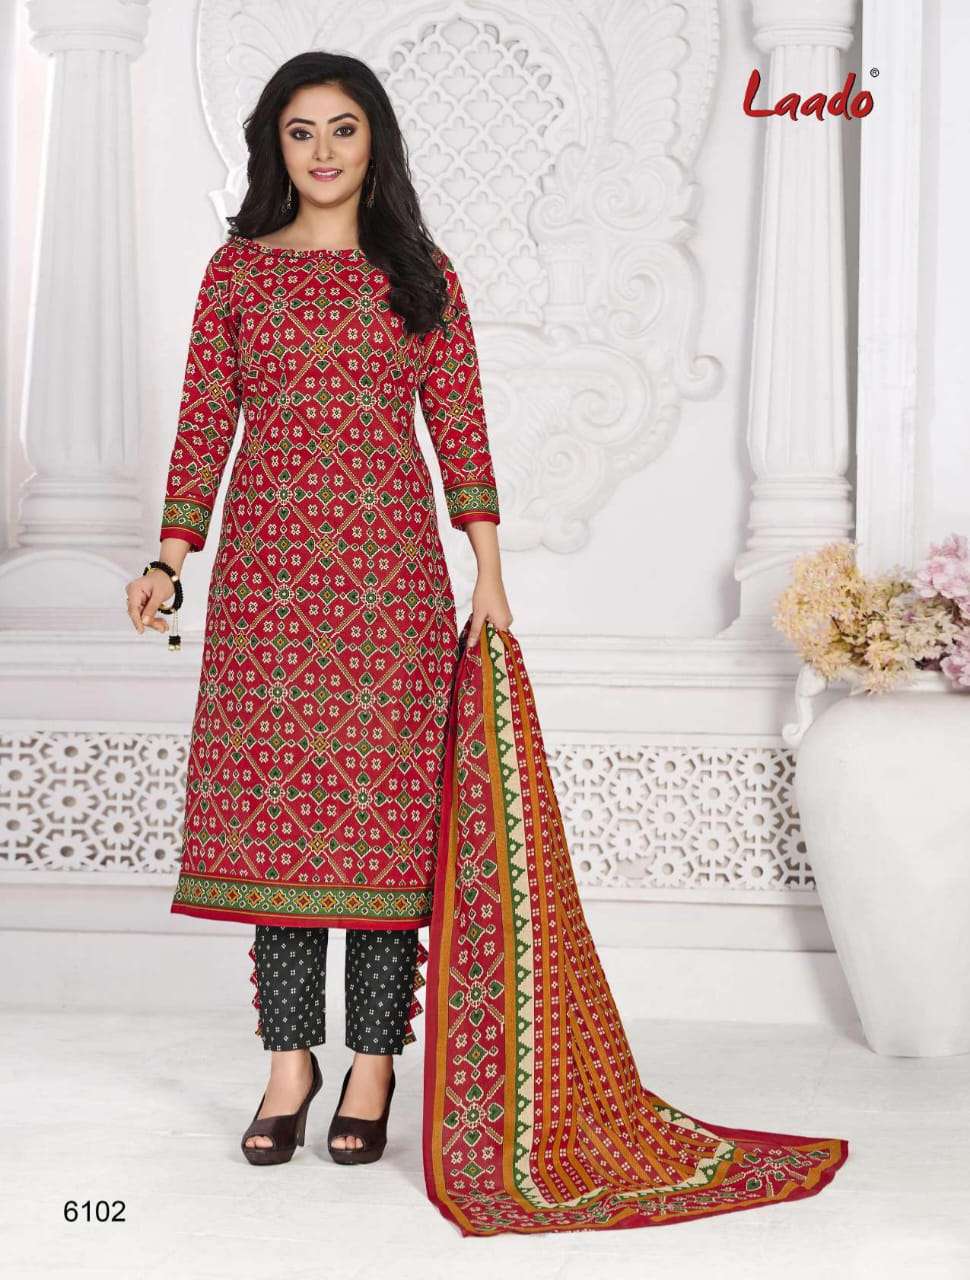 Laado Vol 61 By Hanuman Printed Cotton Dress Wholesale online Lowest Price Salwar Suit Set